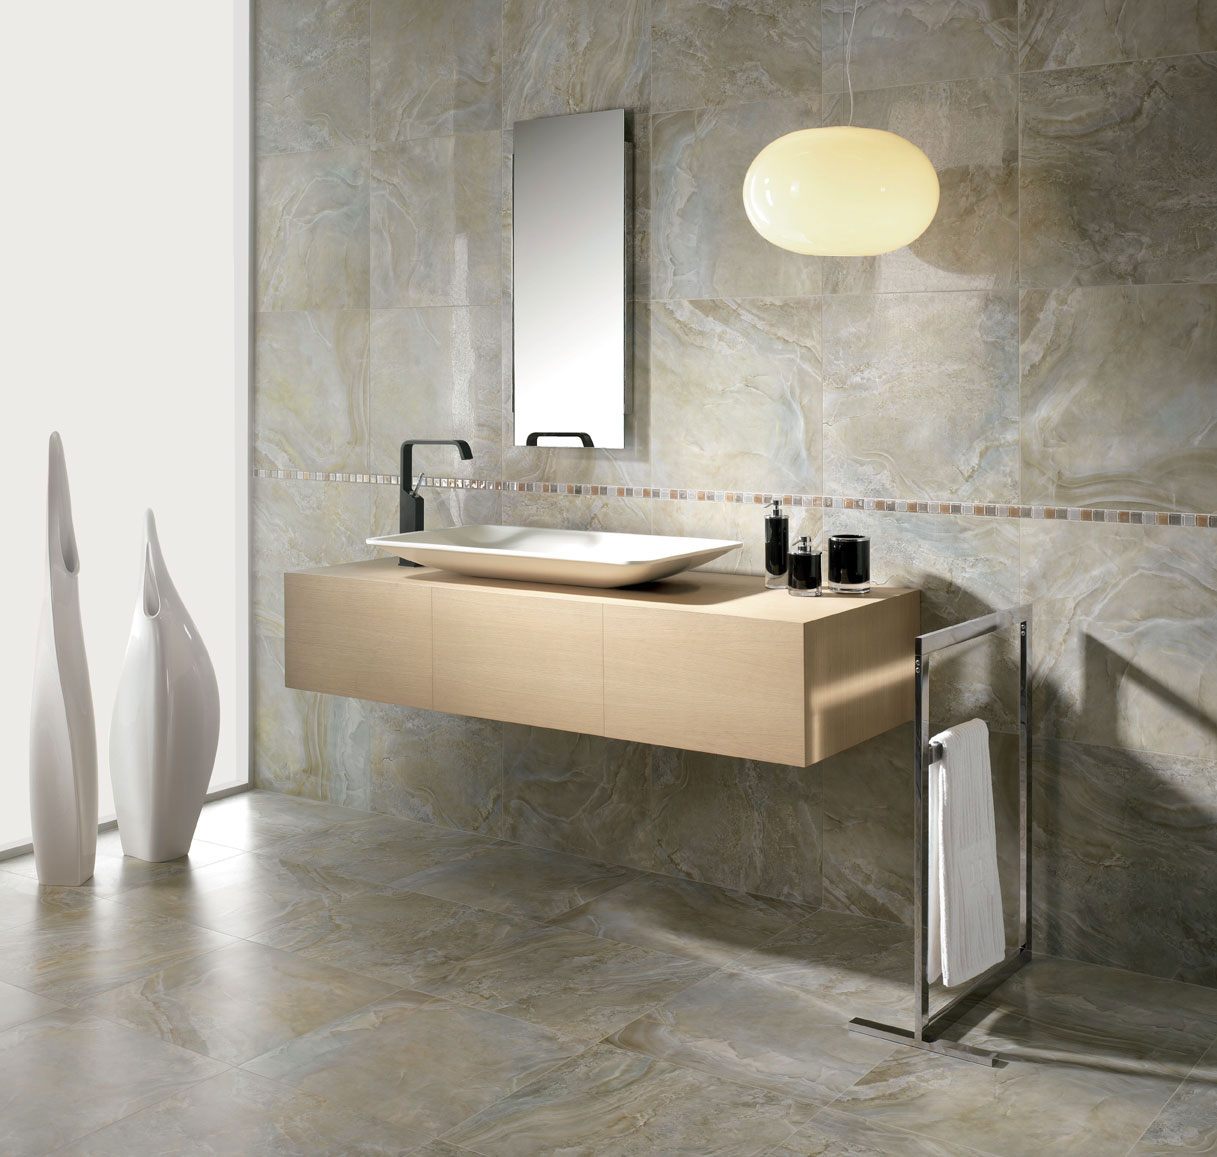 kitchen-interior-bathroom-living-room-stunning-modern-marble-bathroom-tile-design-ideas-30-cool-inspiring-ceramic-floor-tile-design-ideas2